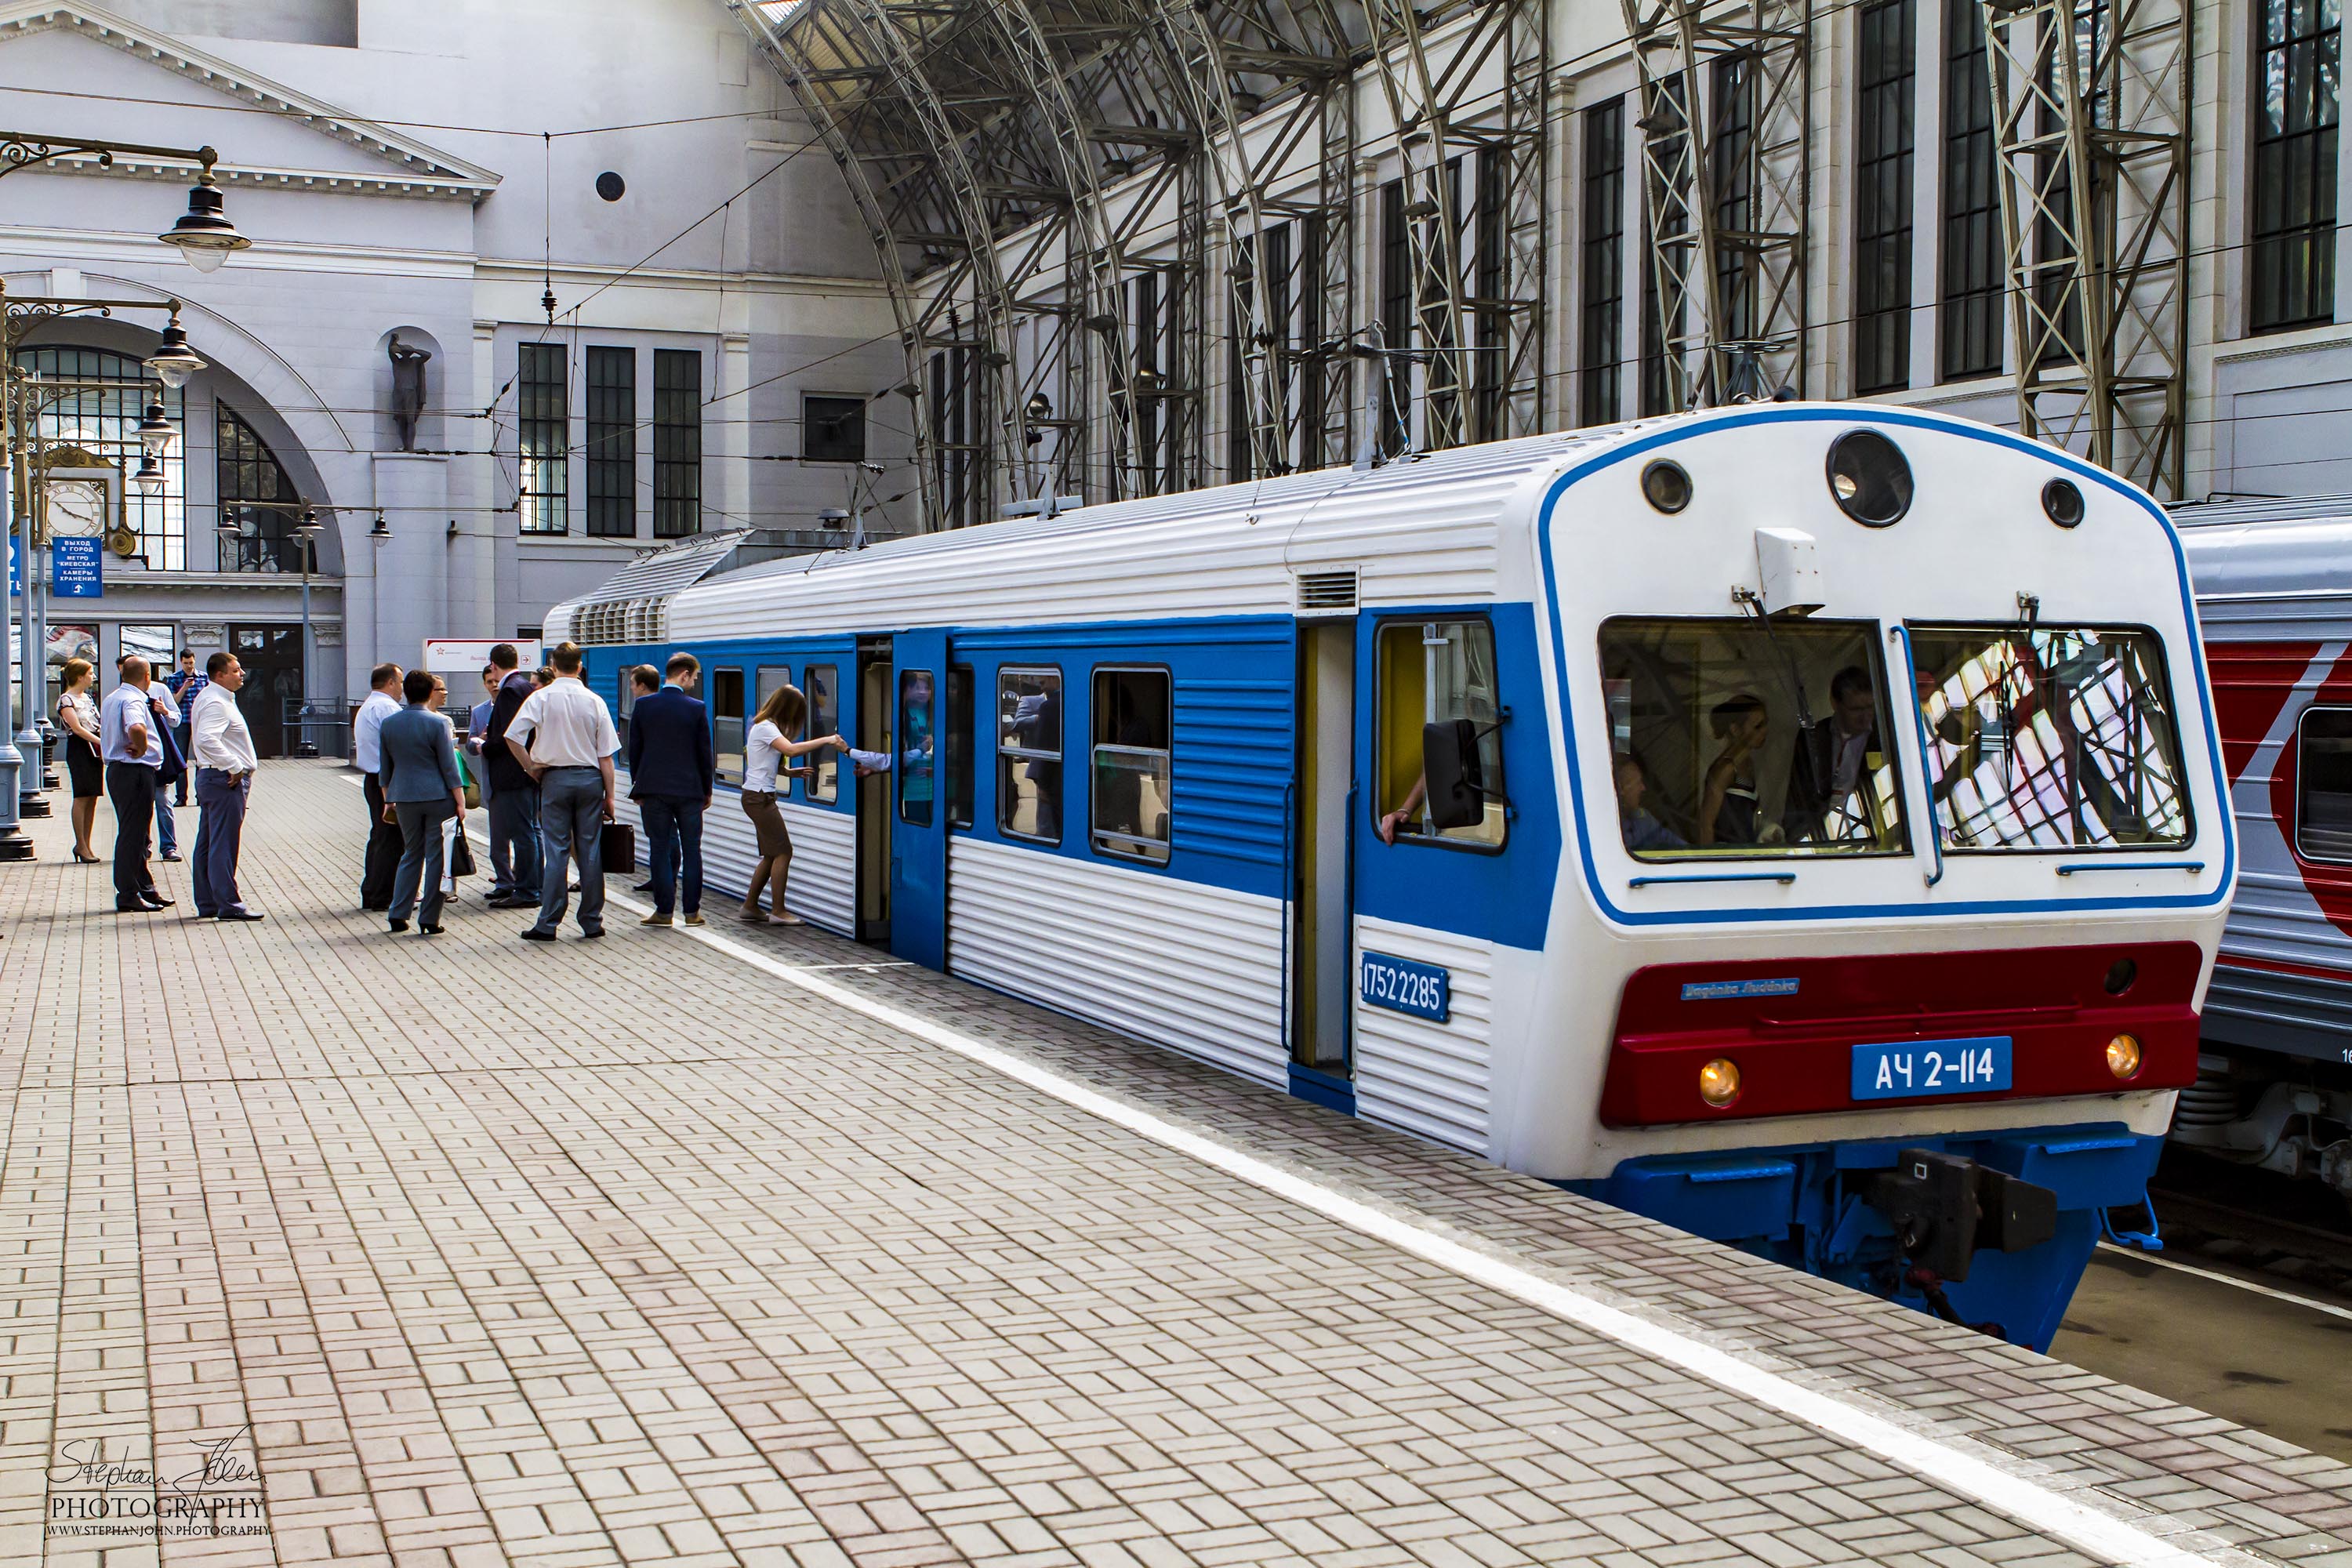 Diensttriebwagen (автомотриса) im Kiewer Bahnhof in Moskau

